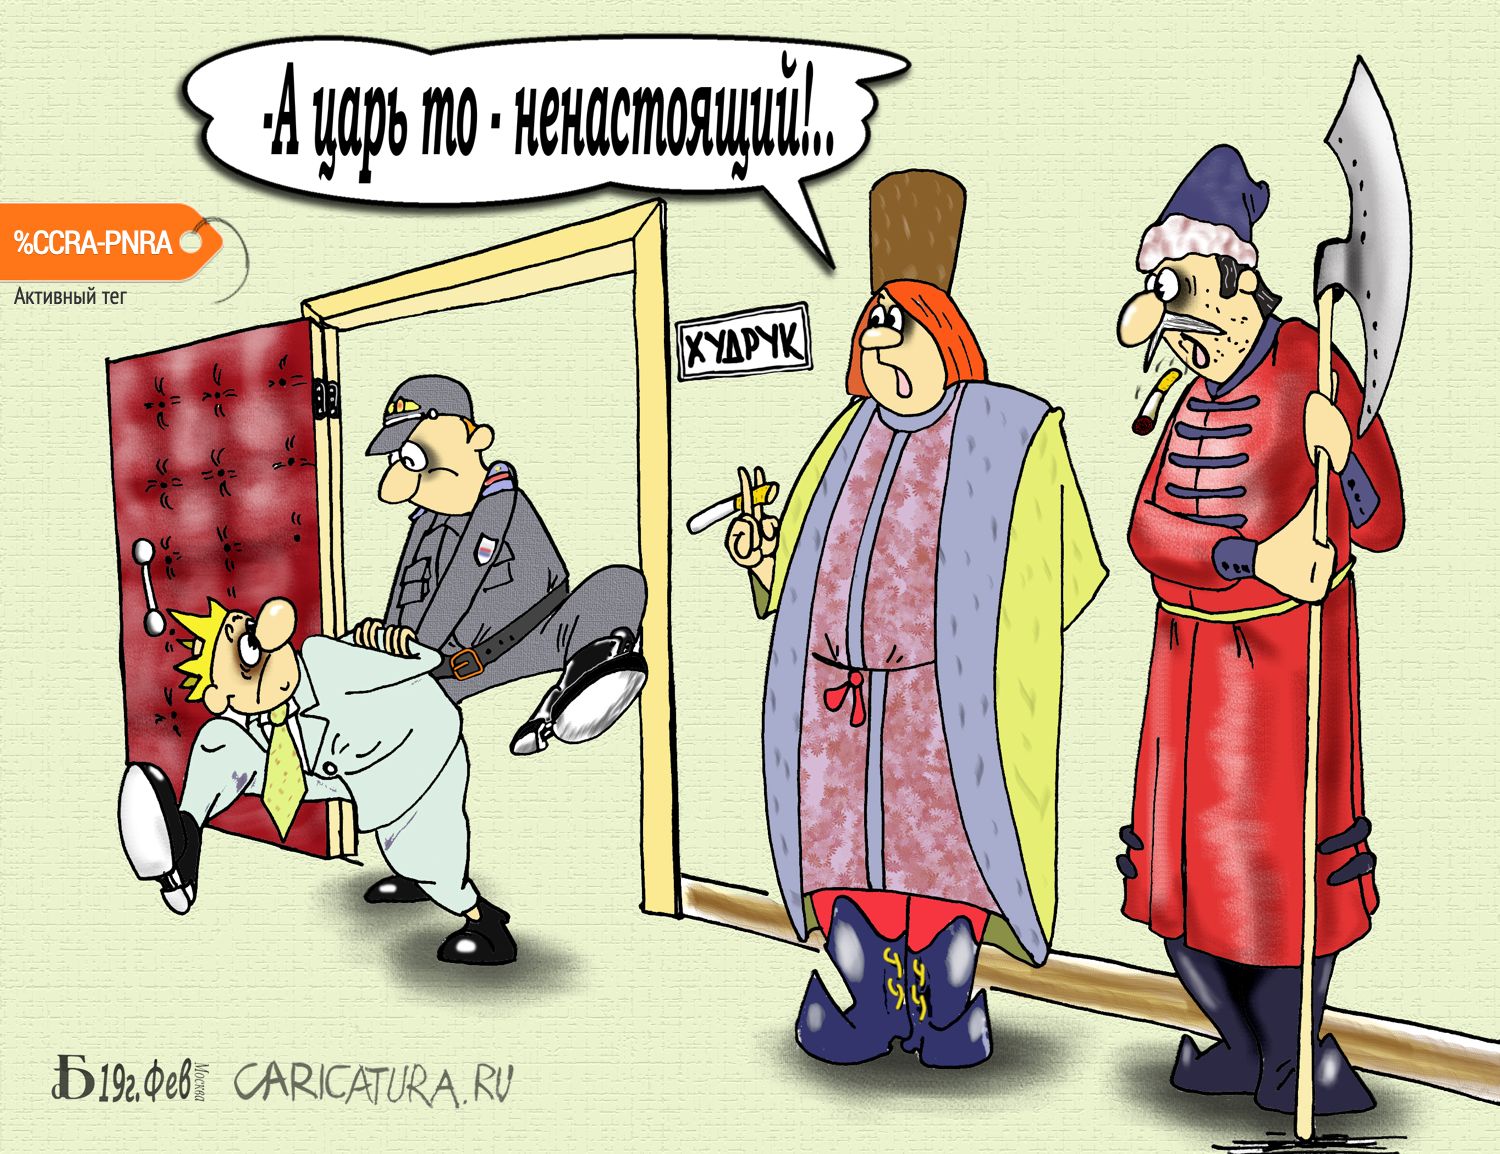 Карикатура "Про ненастоящего царя", Борис Демин